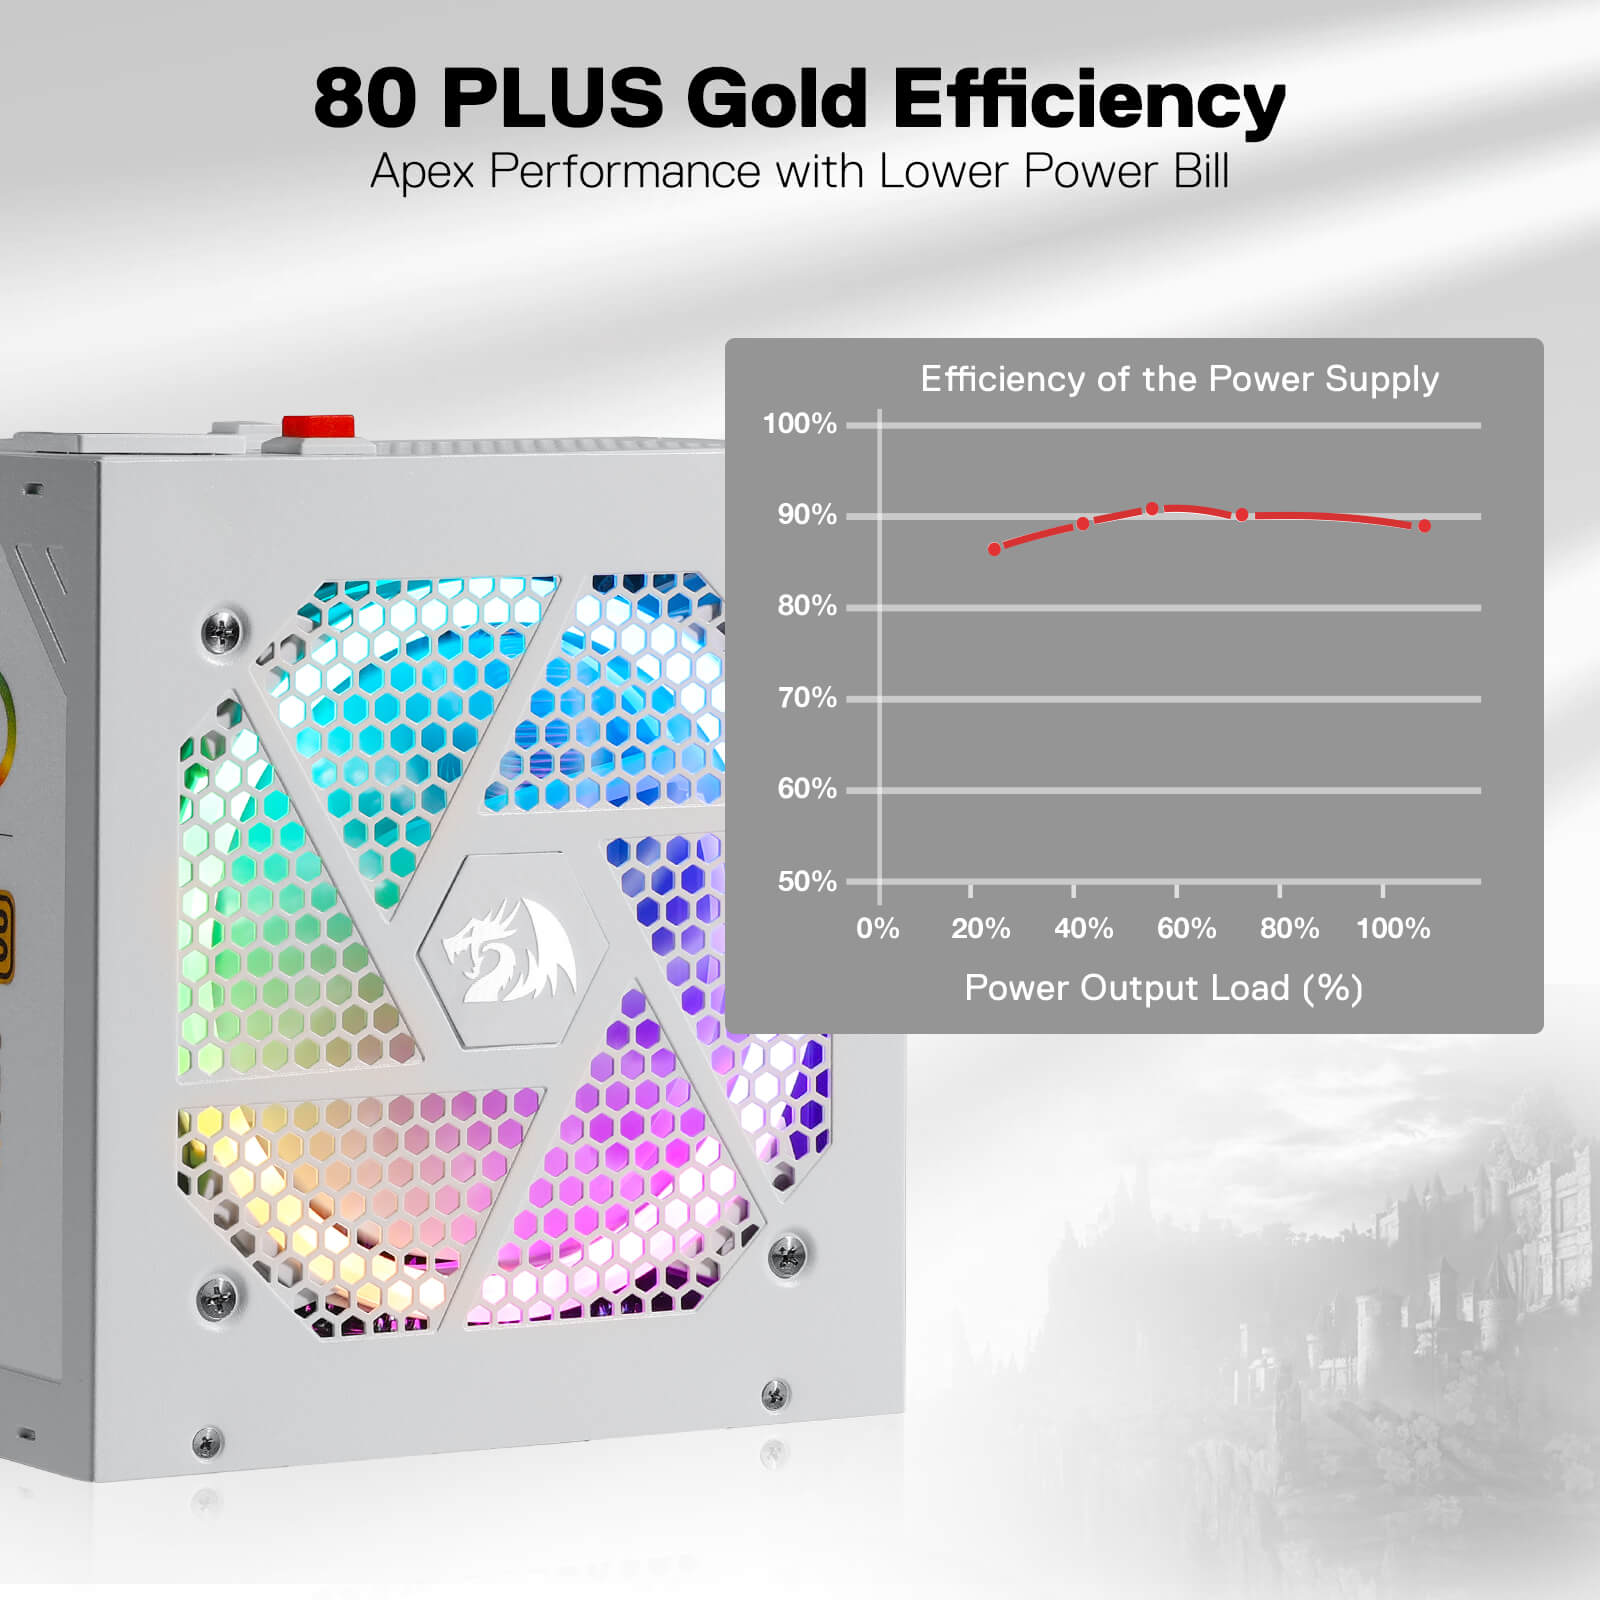 Redragon PSU007 80+ Gold 850 Watt ATX Fully Modular Power Supply w 80 Plus Gold Certified